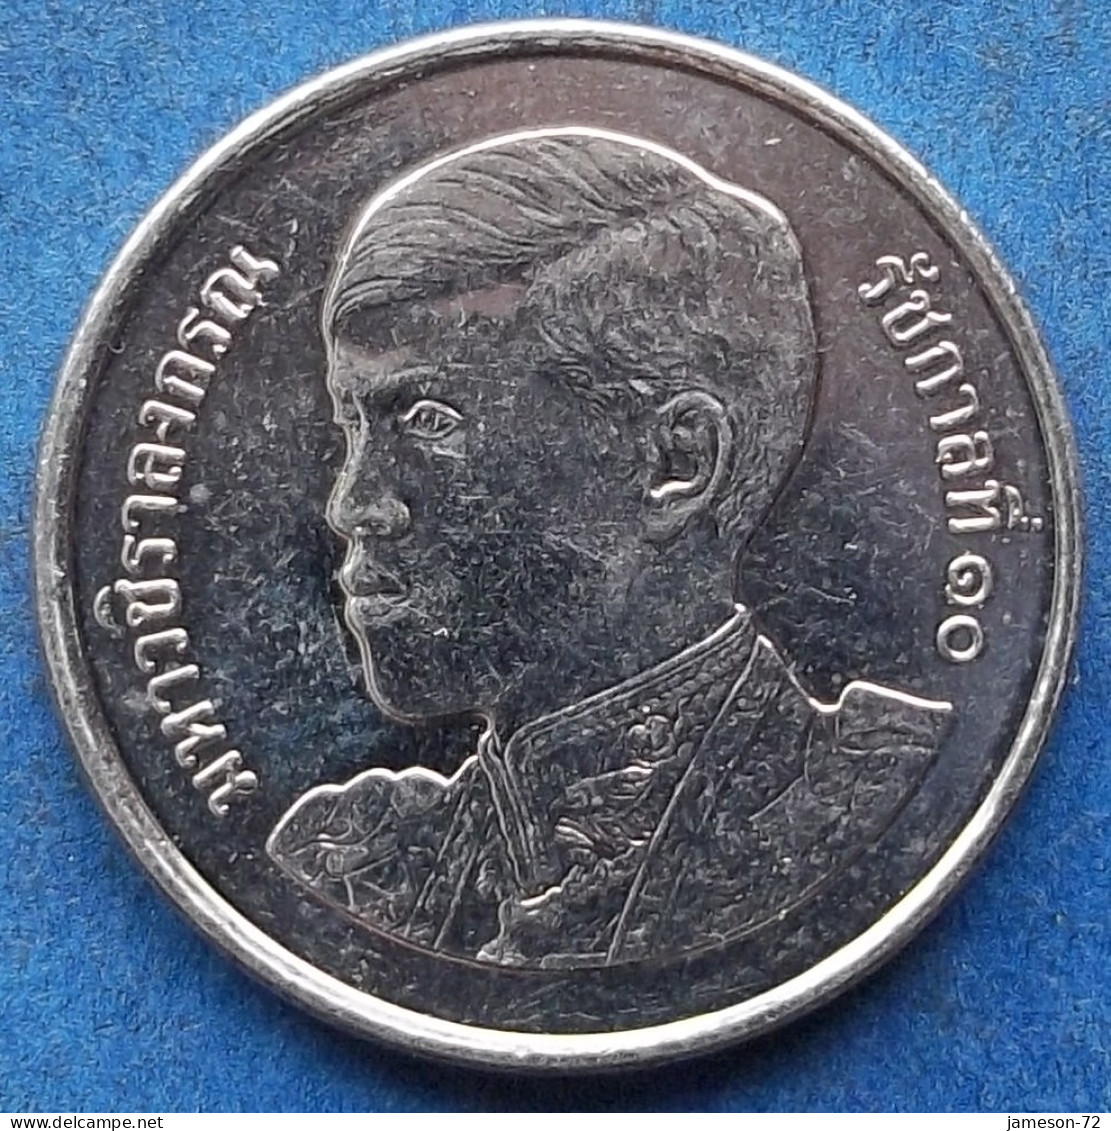 THAILAND - 1 Baht BE2561 2018AD Rama X Vajiralongkorn (2018) - Edelweiss Coins - Thailand